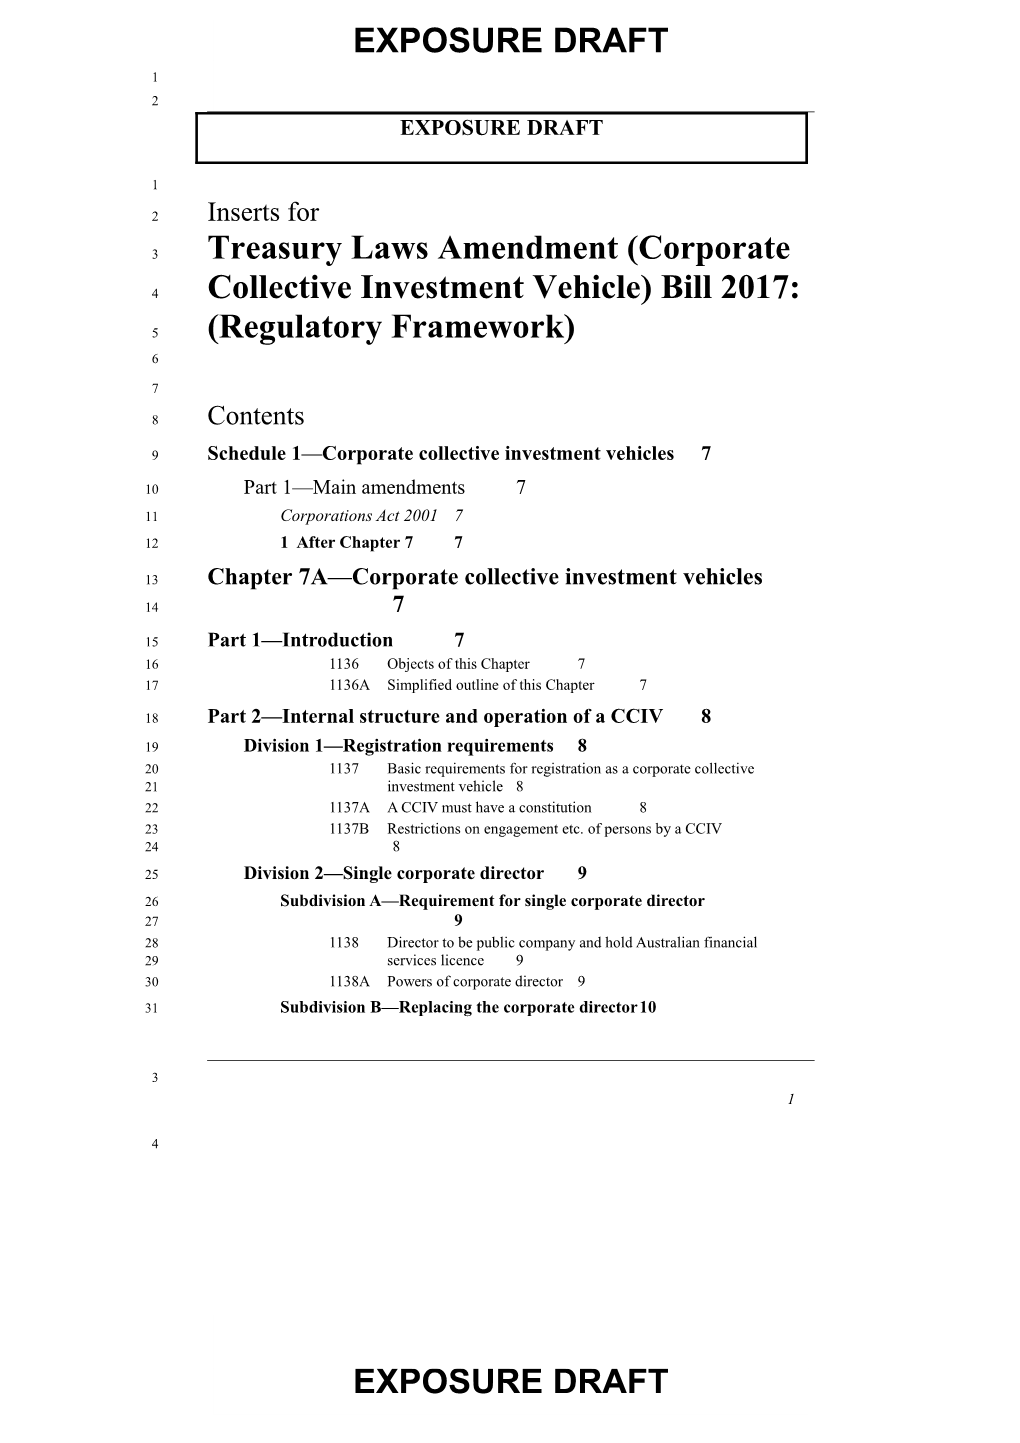 Treasury Laws Amendment (Corporate Collective Investment Vehicle) Bill 2017: (Regulatory